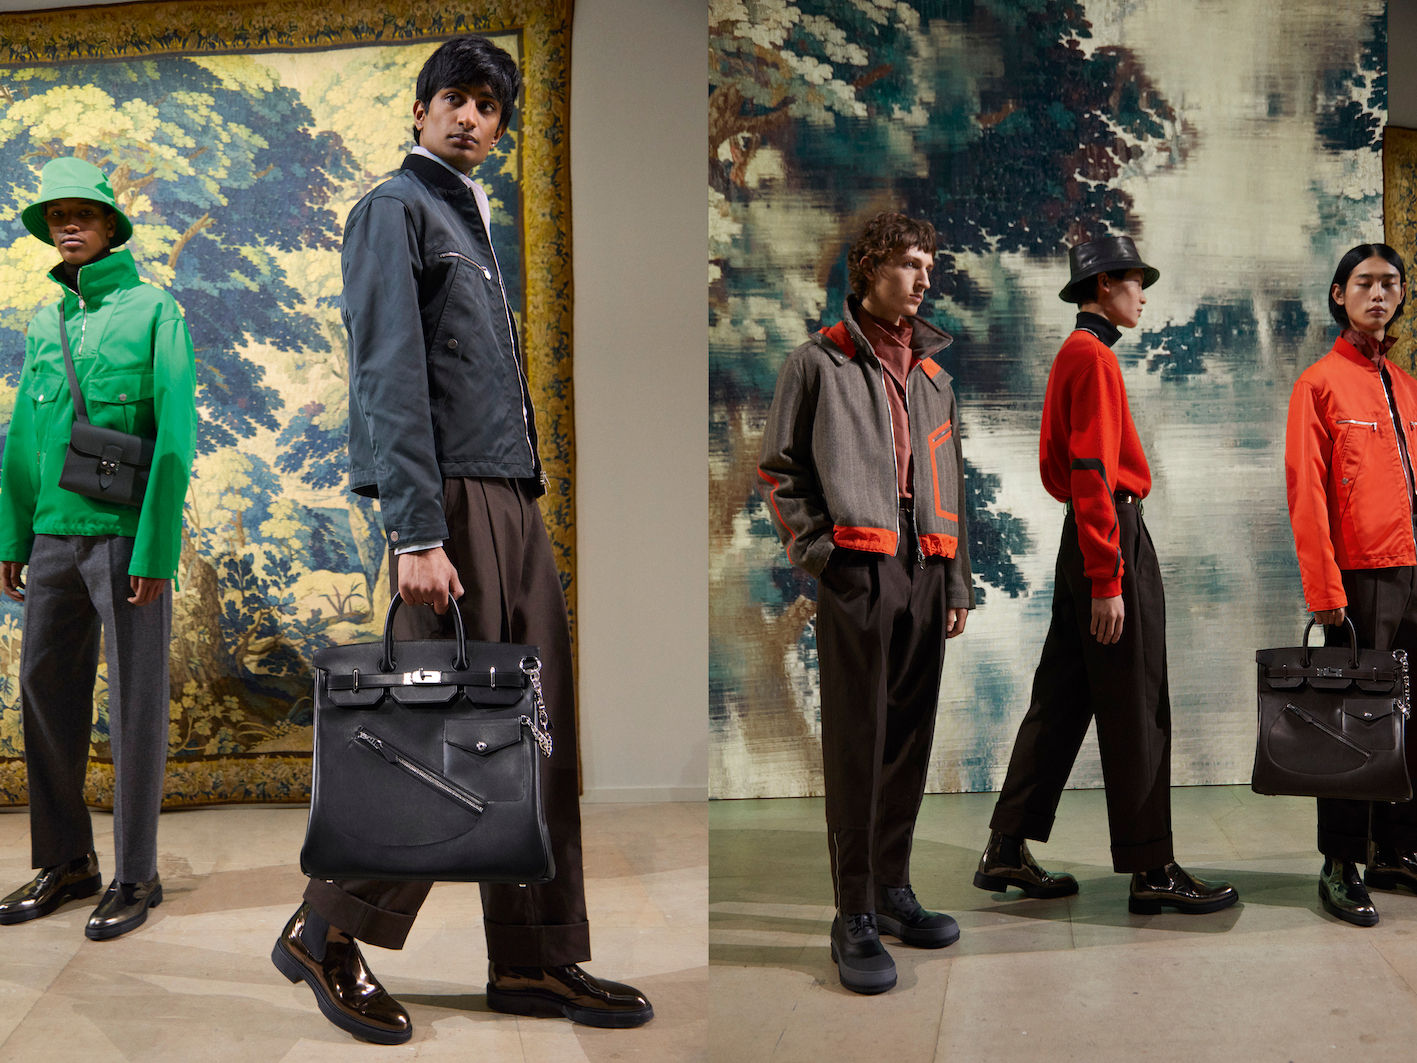 First Look: Hermès launches a Birkin Bag for Men